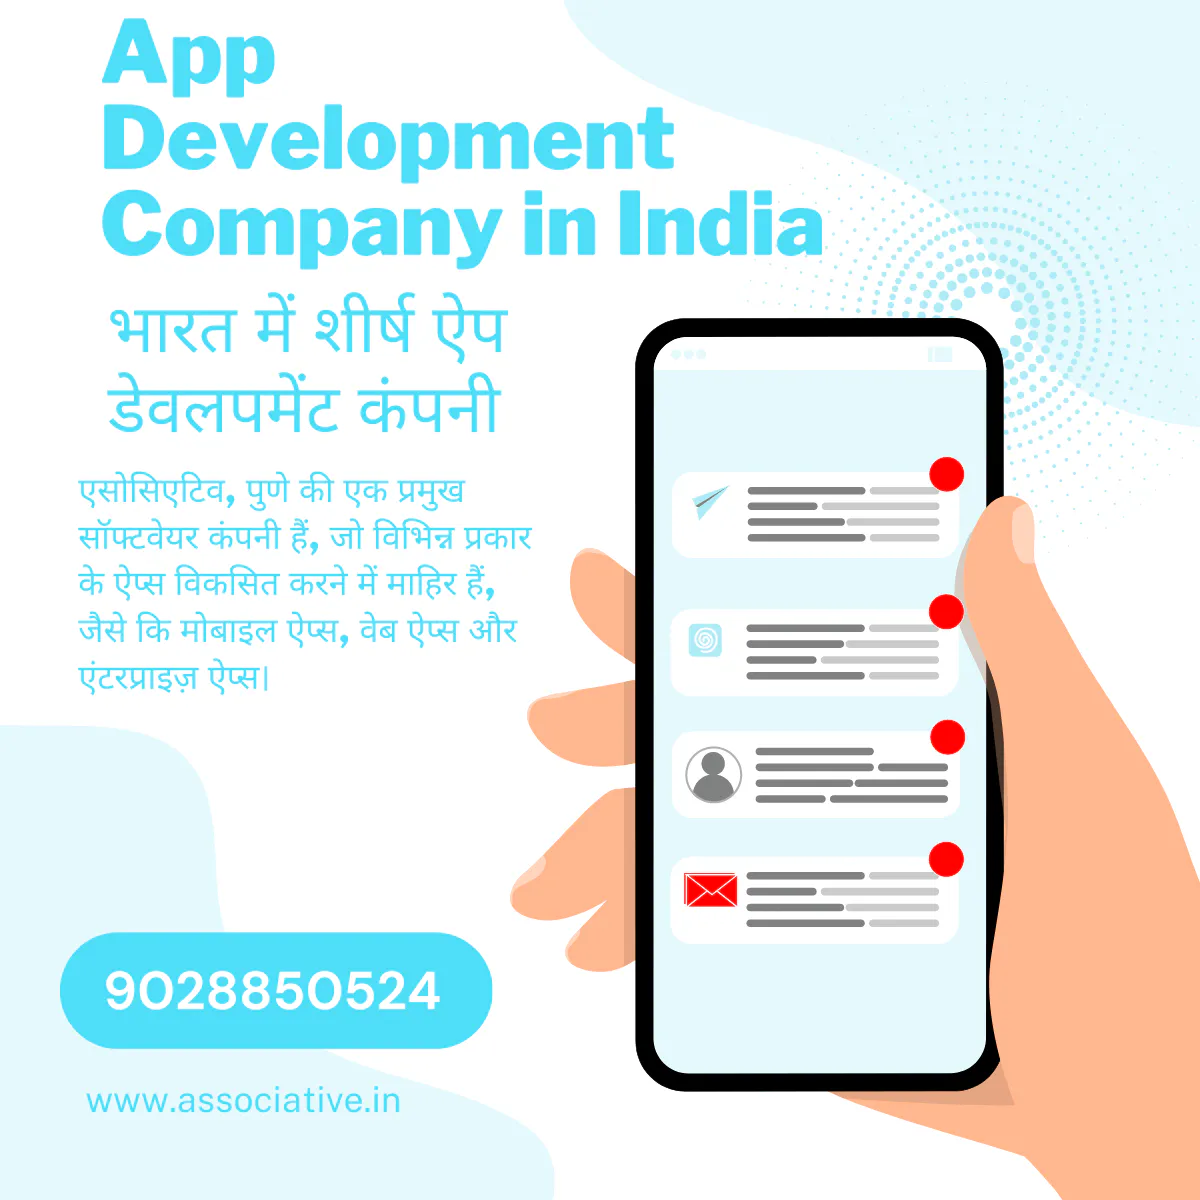 App Development Company in India